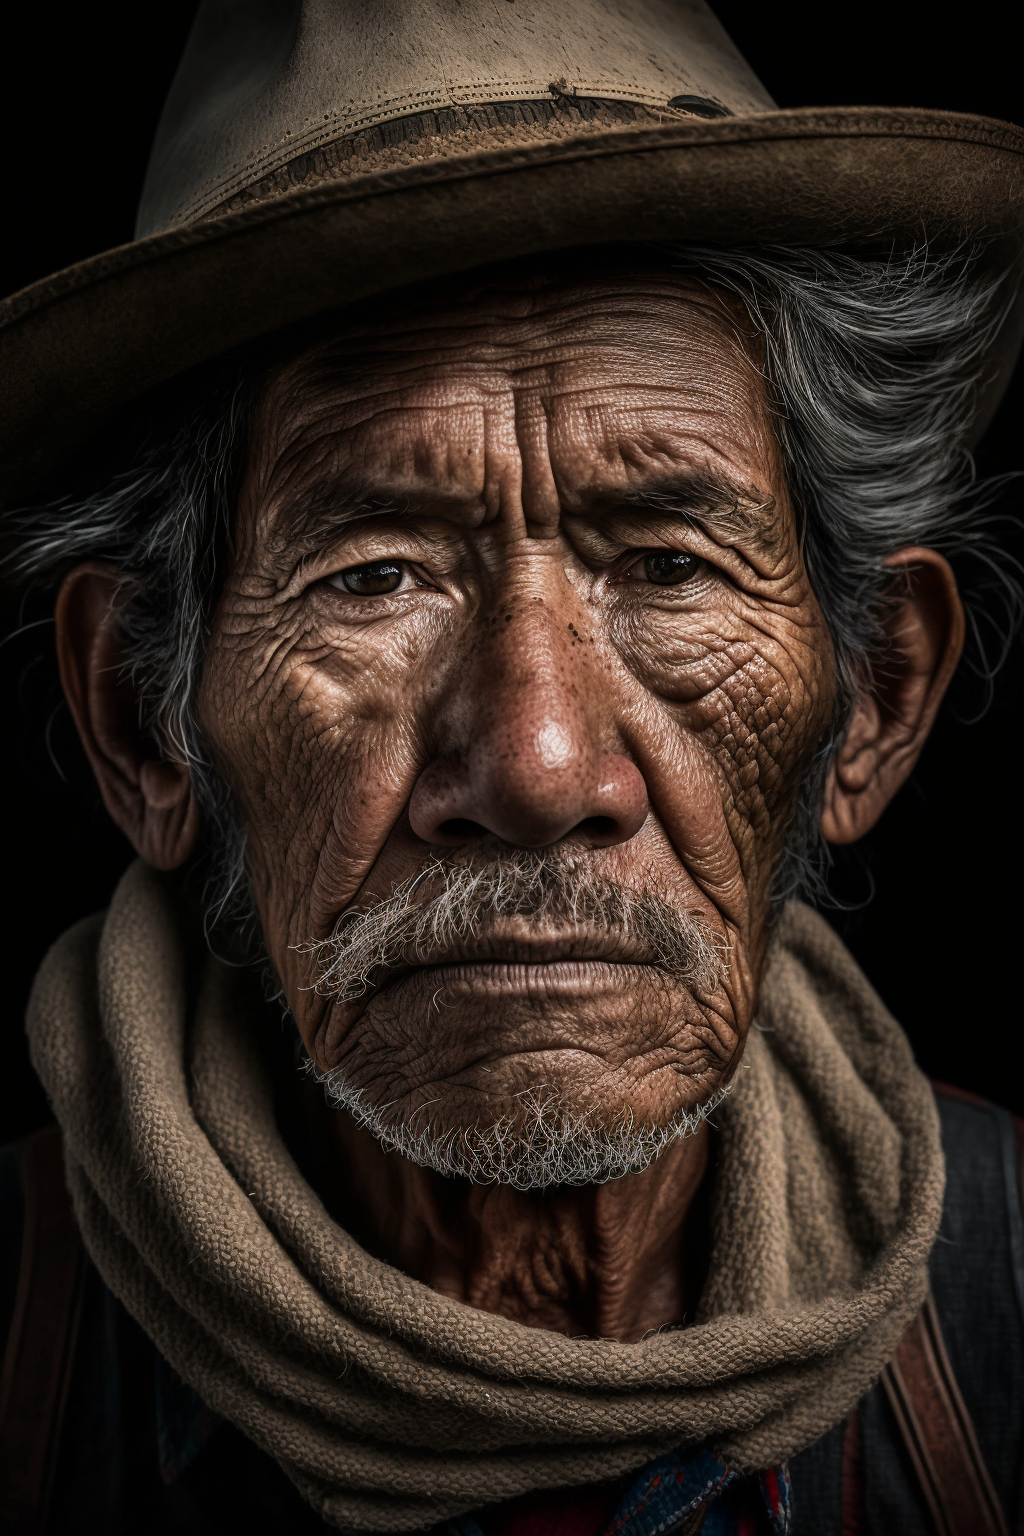 El_Topo_Loco_Upper-body_portrait_of_elderly_field_worker_in_Mex_0692d383-0404-462b-8269-ee0bc8c6a80b.png